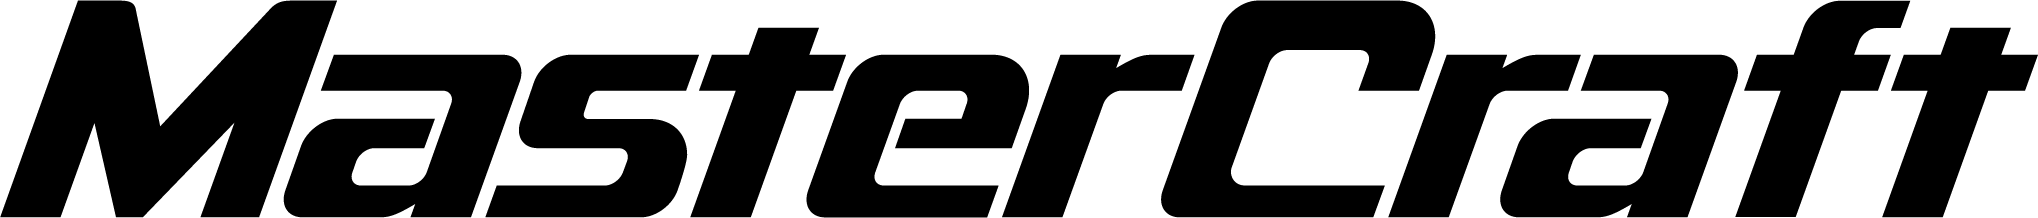 MasterCraft brand logo